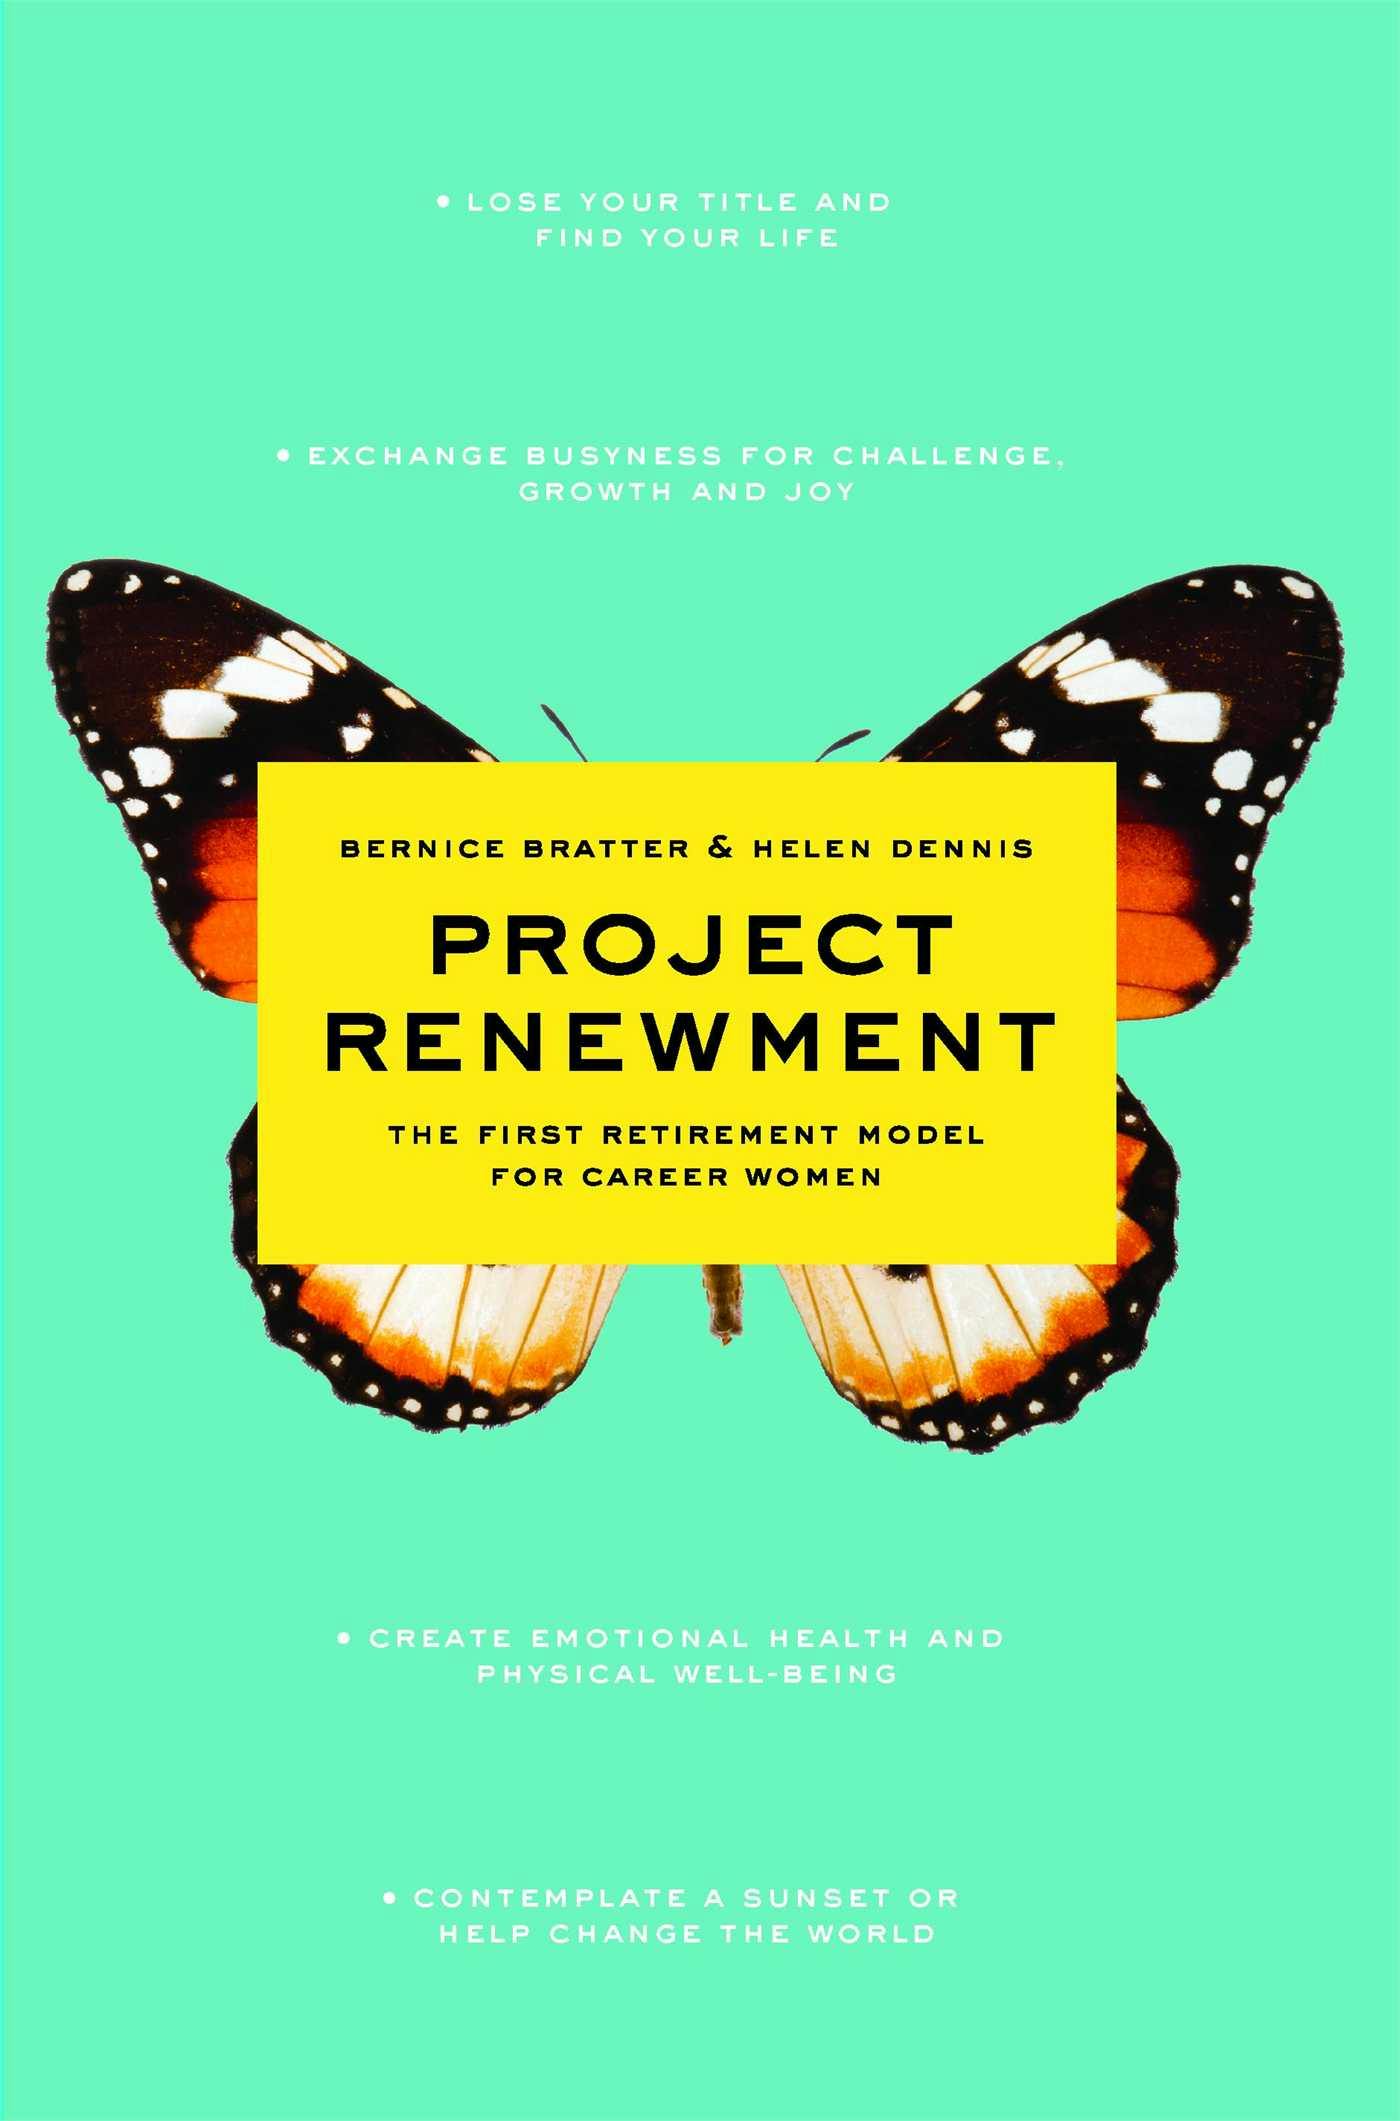 Project Renewment: The First Retirement Model for Career Women - Bernice Bratter, Helen Dennis